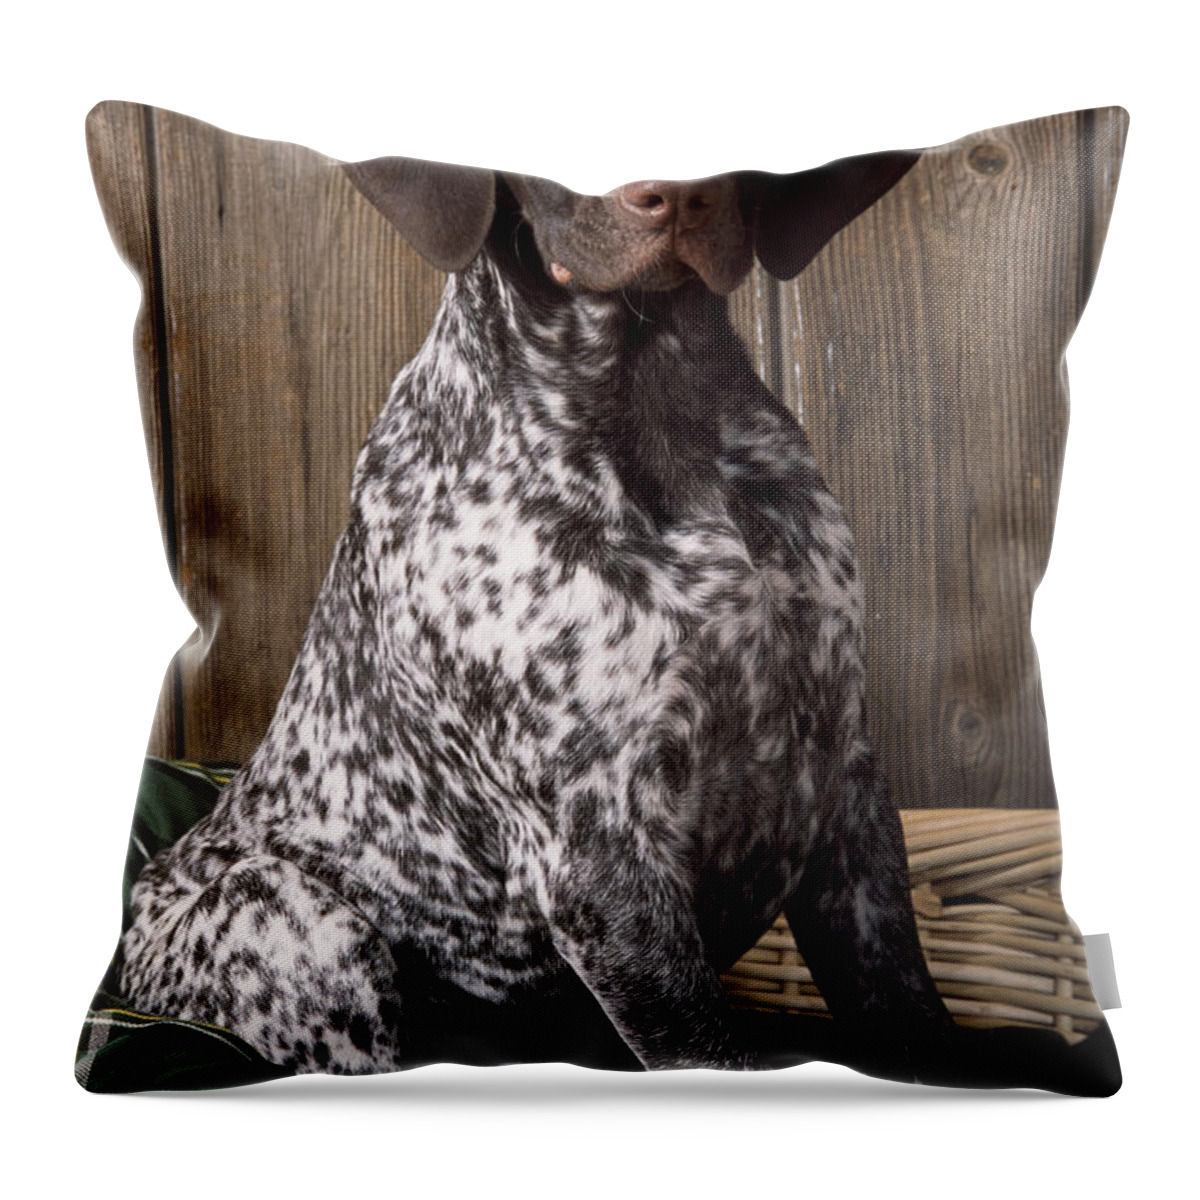 German Short-haired Pointer Throw Pillow featuring the photograph German Short-haired Pointer Dog #1 by John Daniels